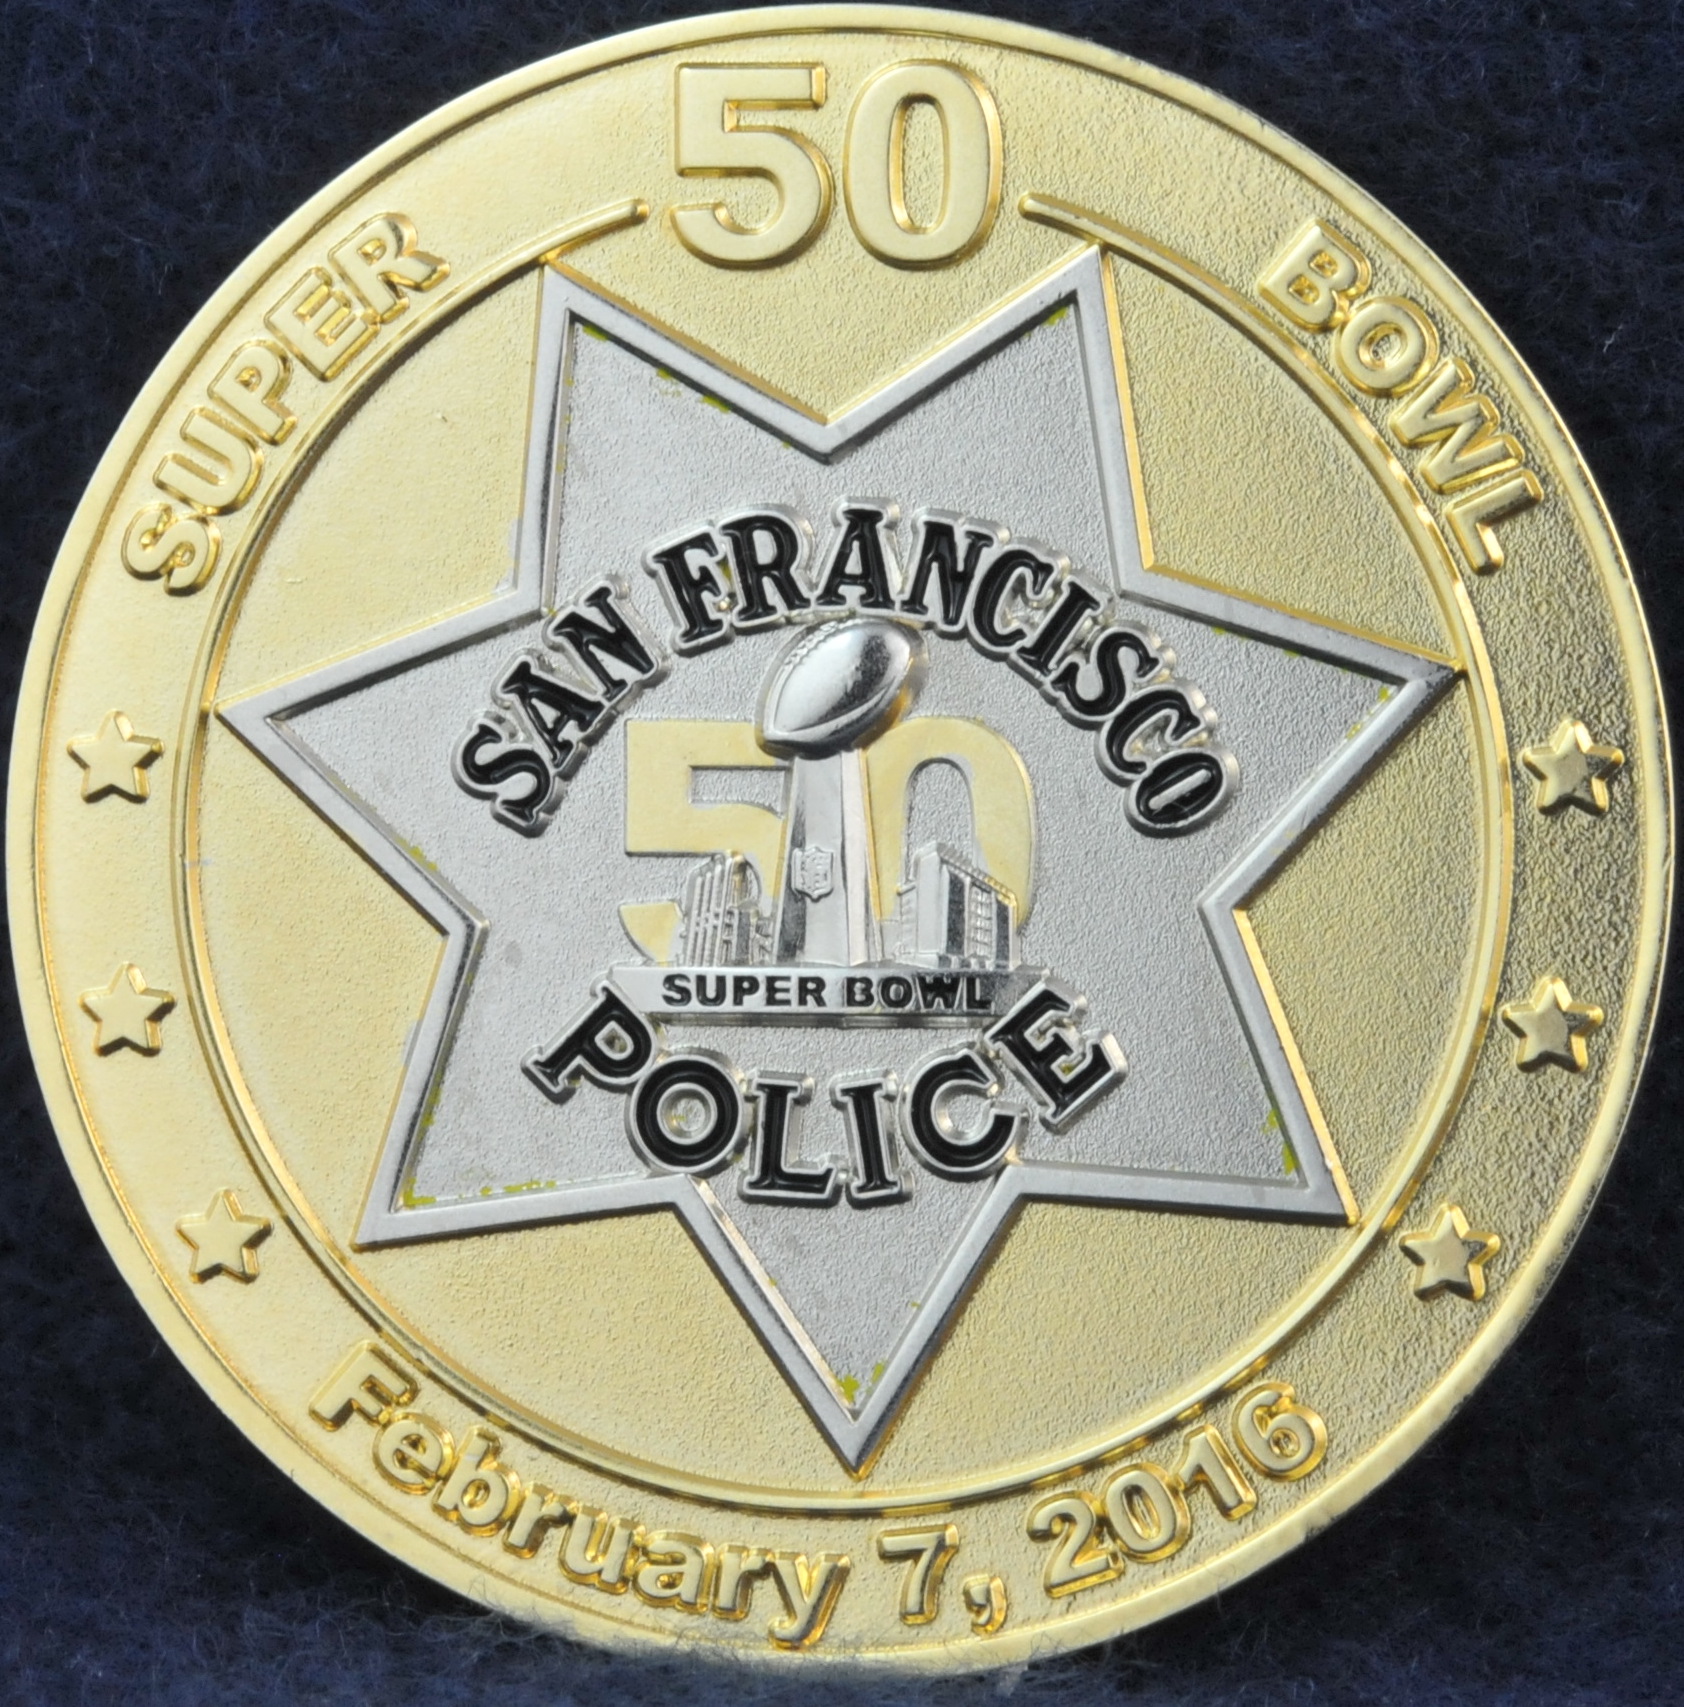 San Francisco Police 50th Super Bowl | Challengecoins.ca1684 x 1707